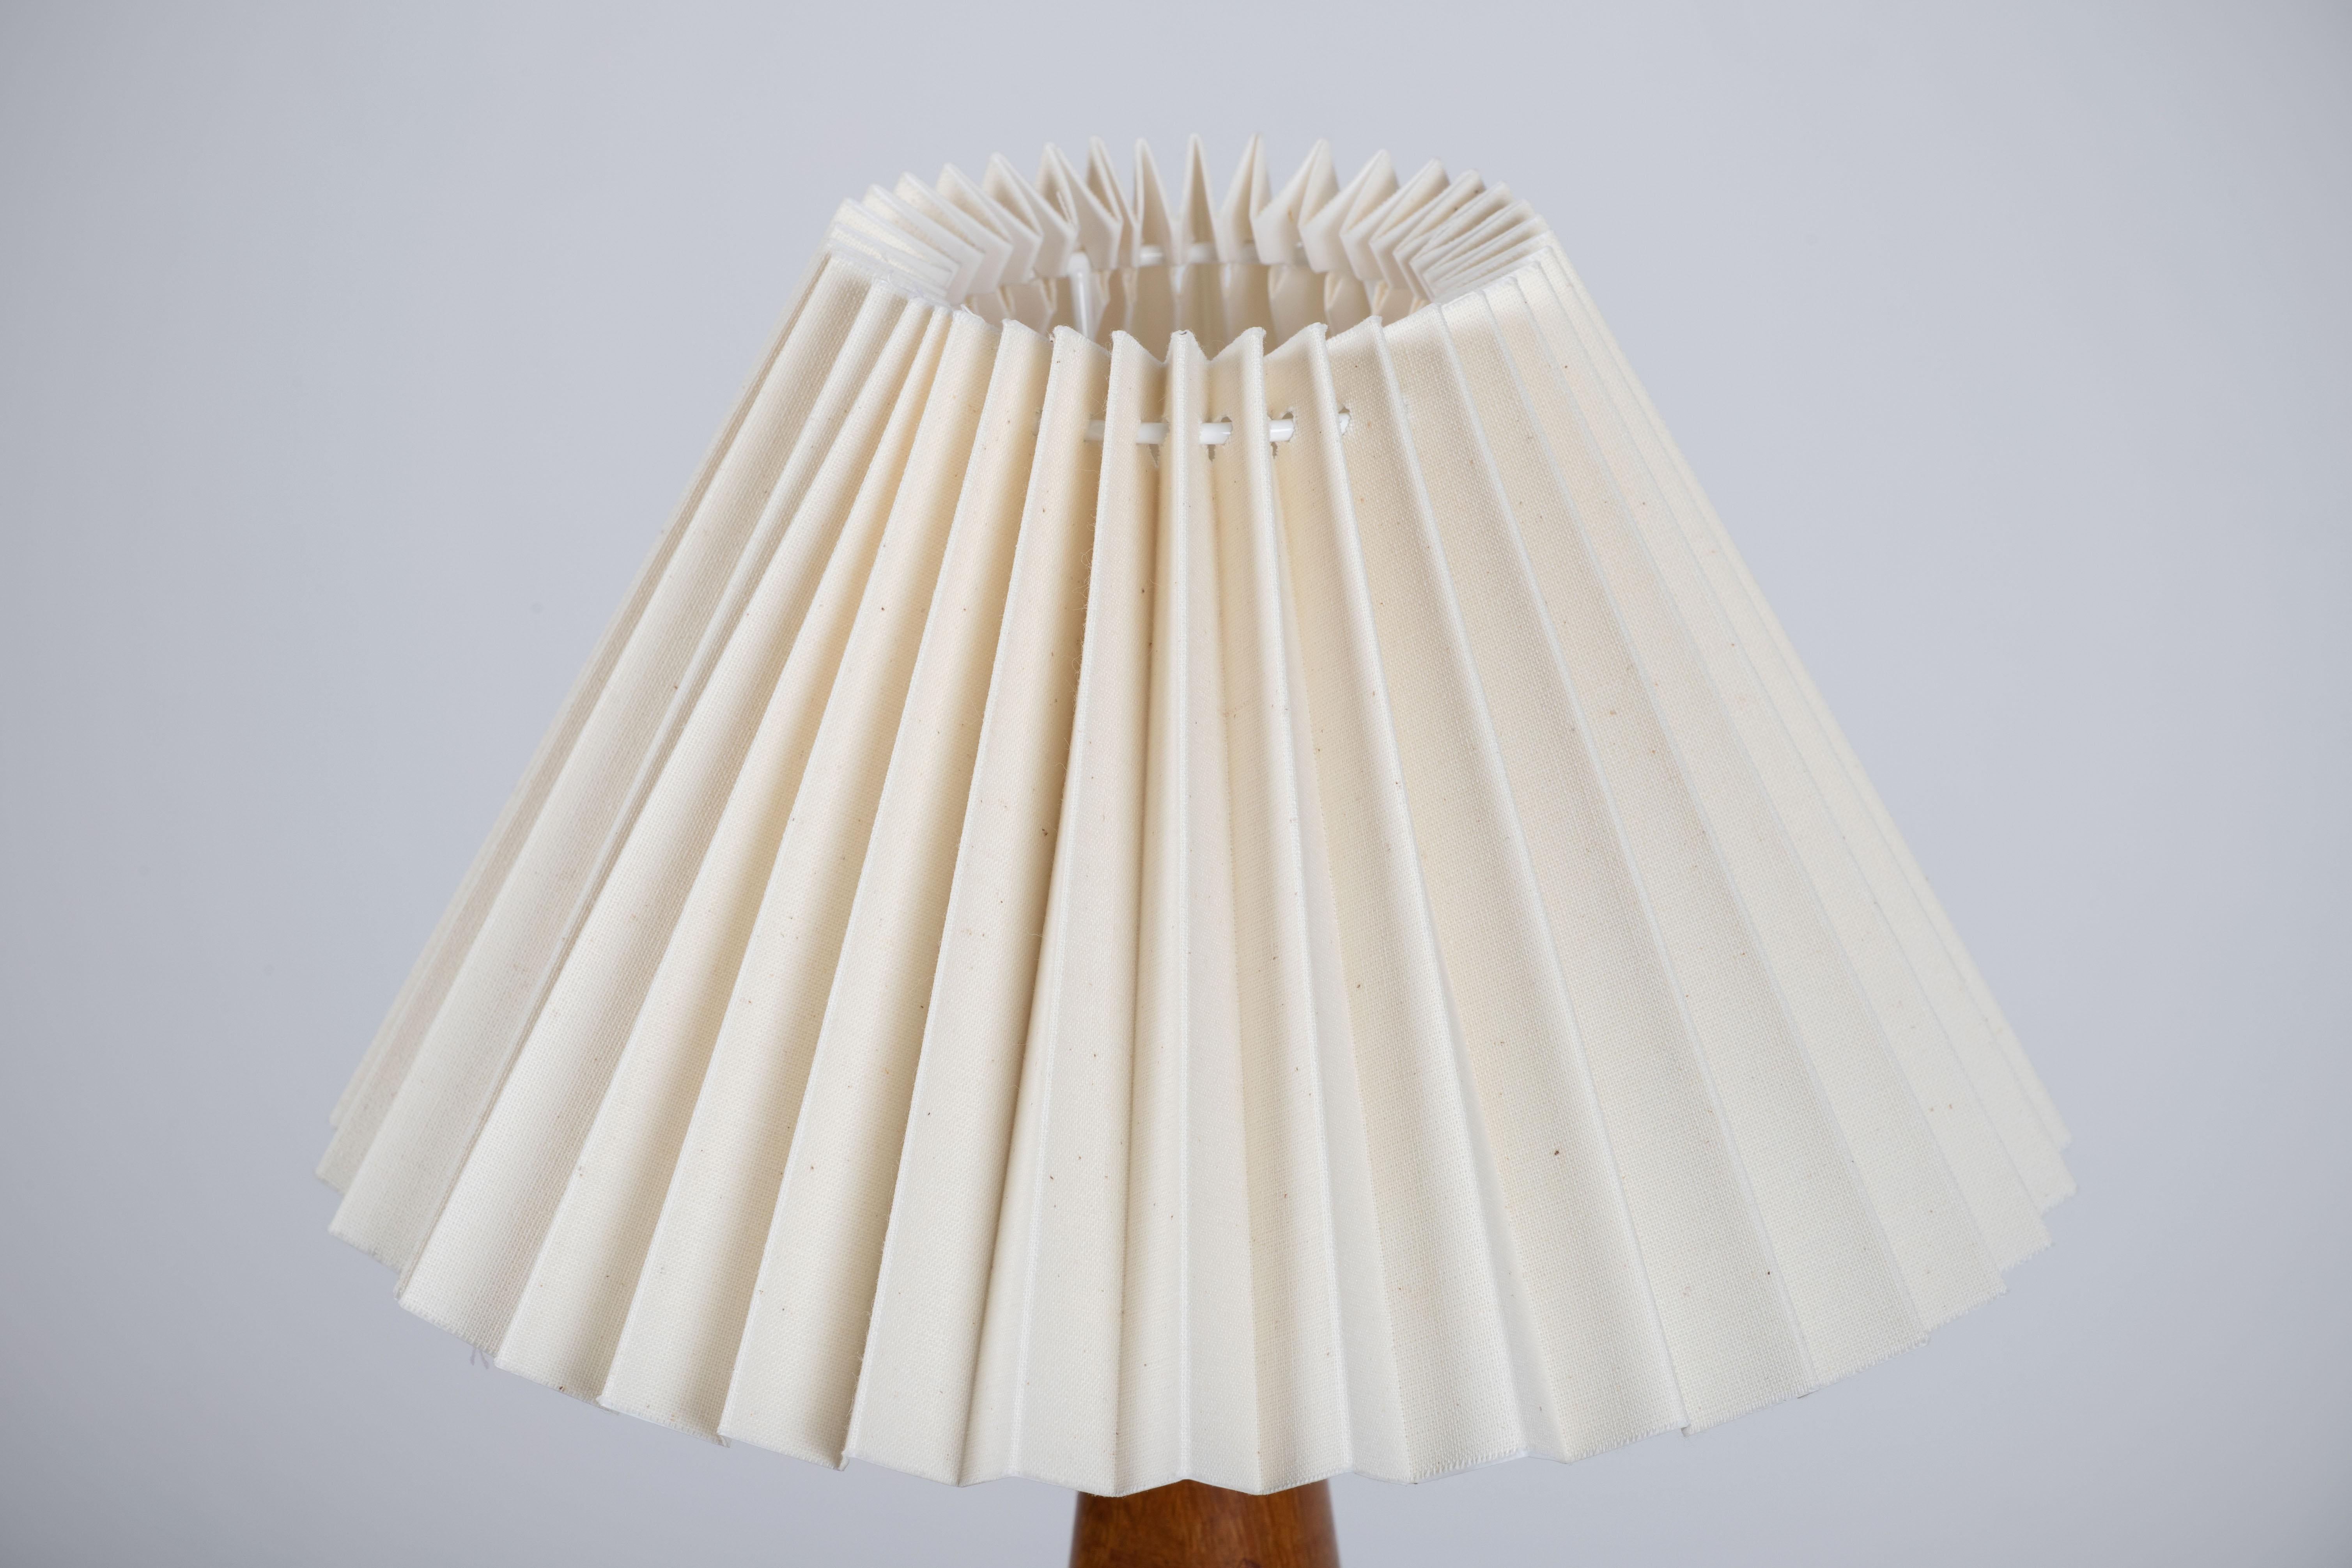 Mid-Century Modern Danish Table Lamp, 1960 In Good Condition For Sale In Wiesbaden, DE